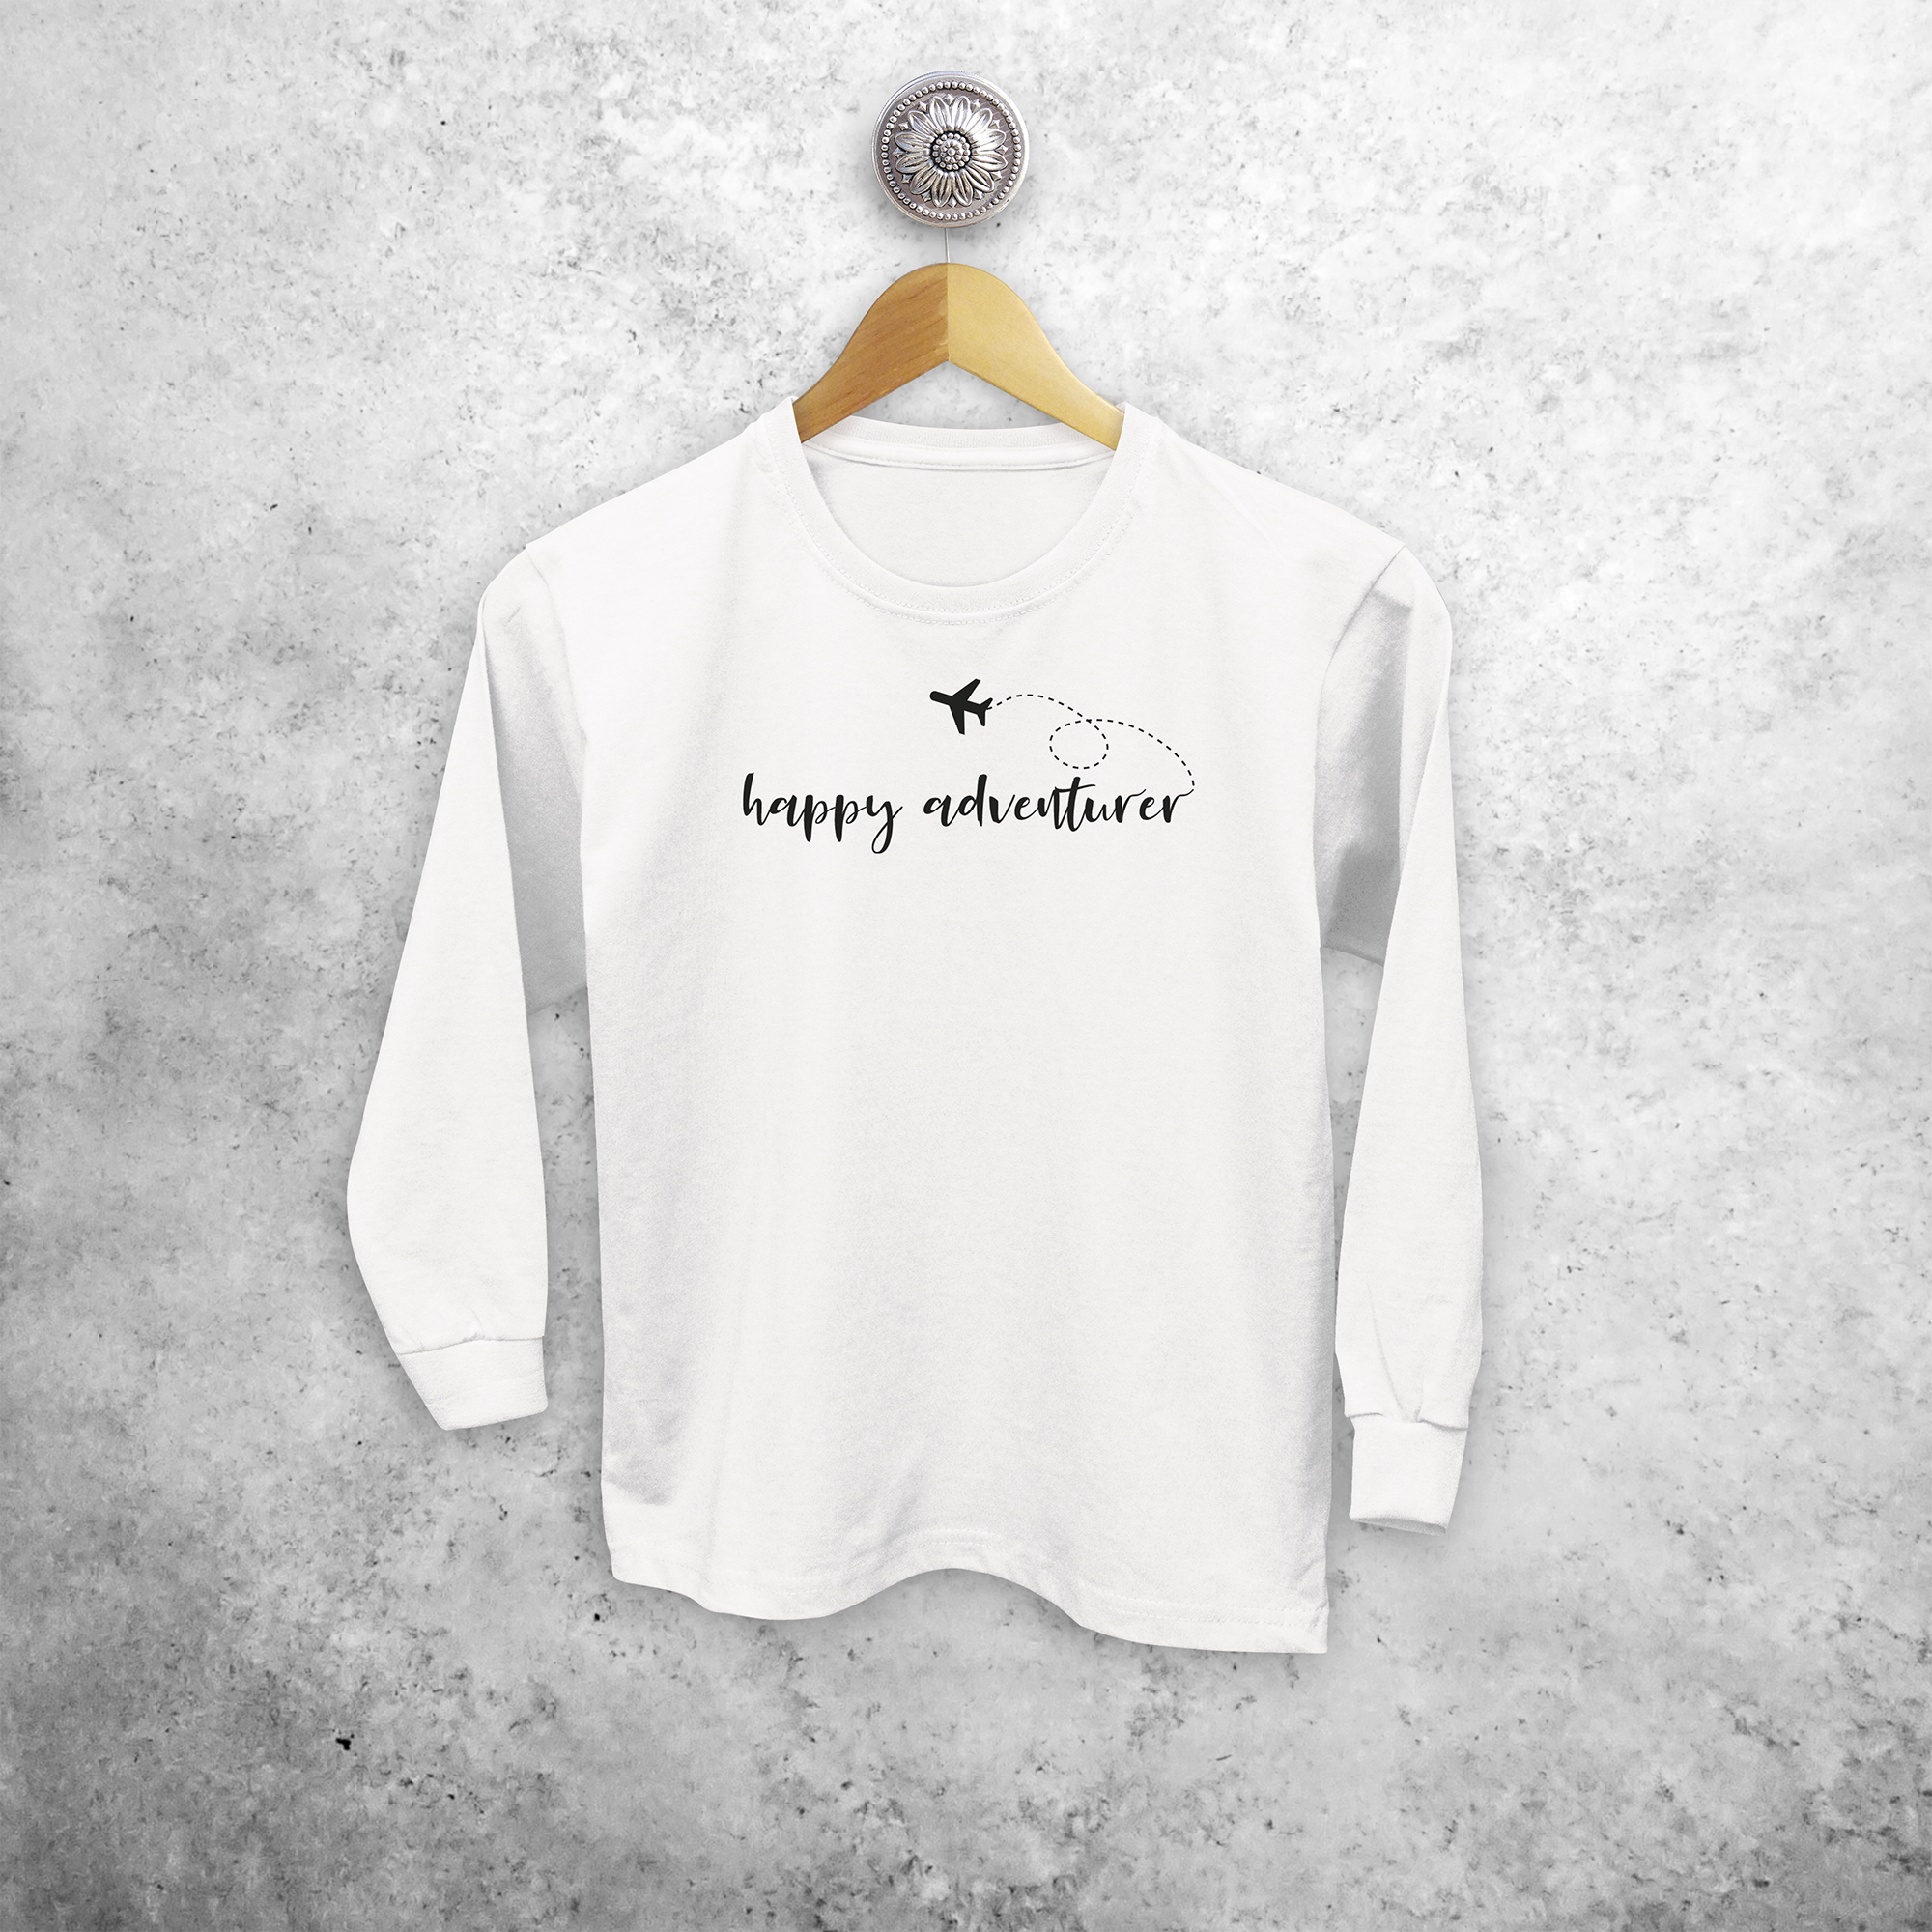 'Happy adventurer' kids longsleeve shirt